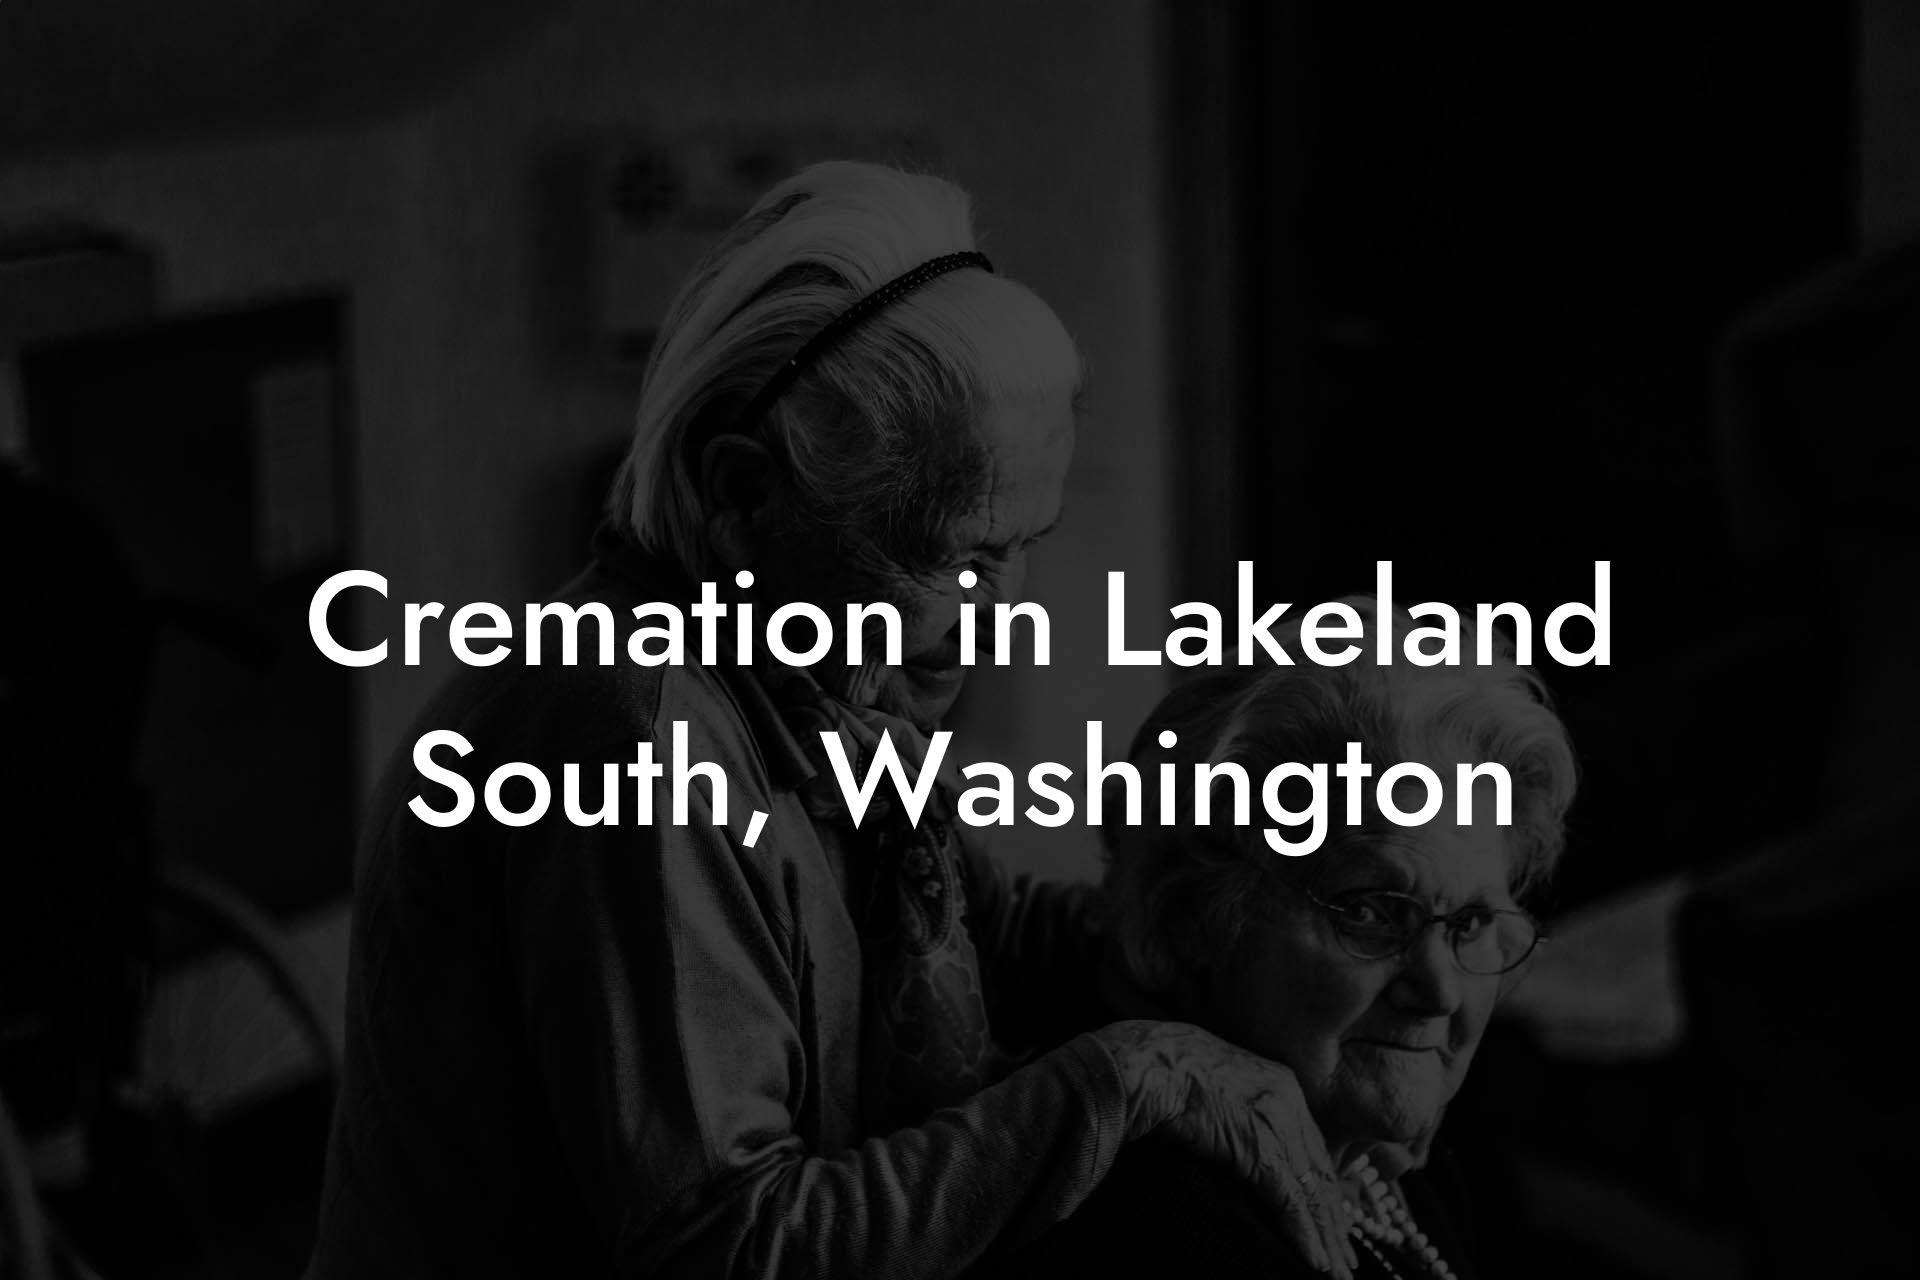 Cremation in Lakeland South, Washington